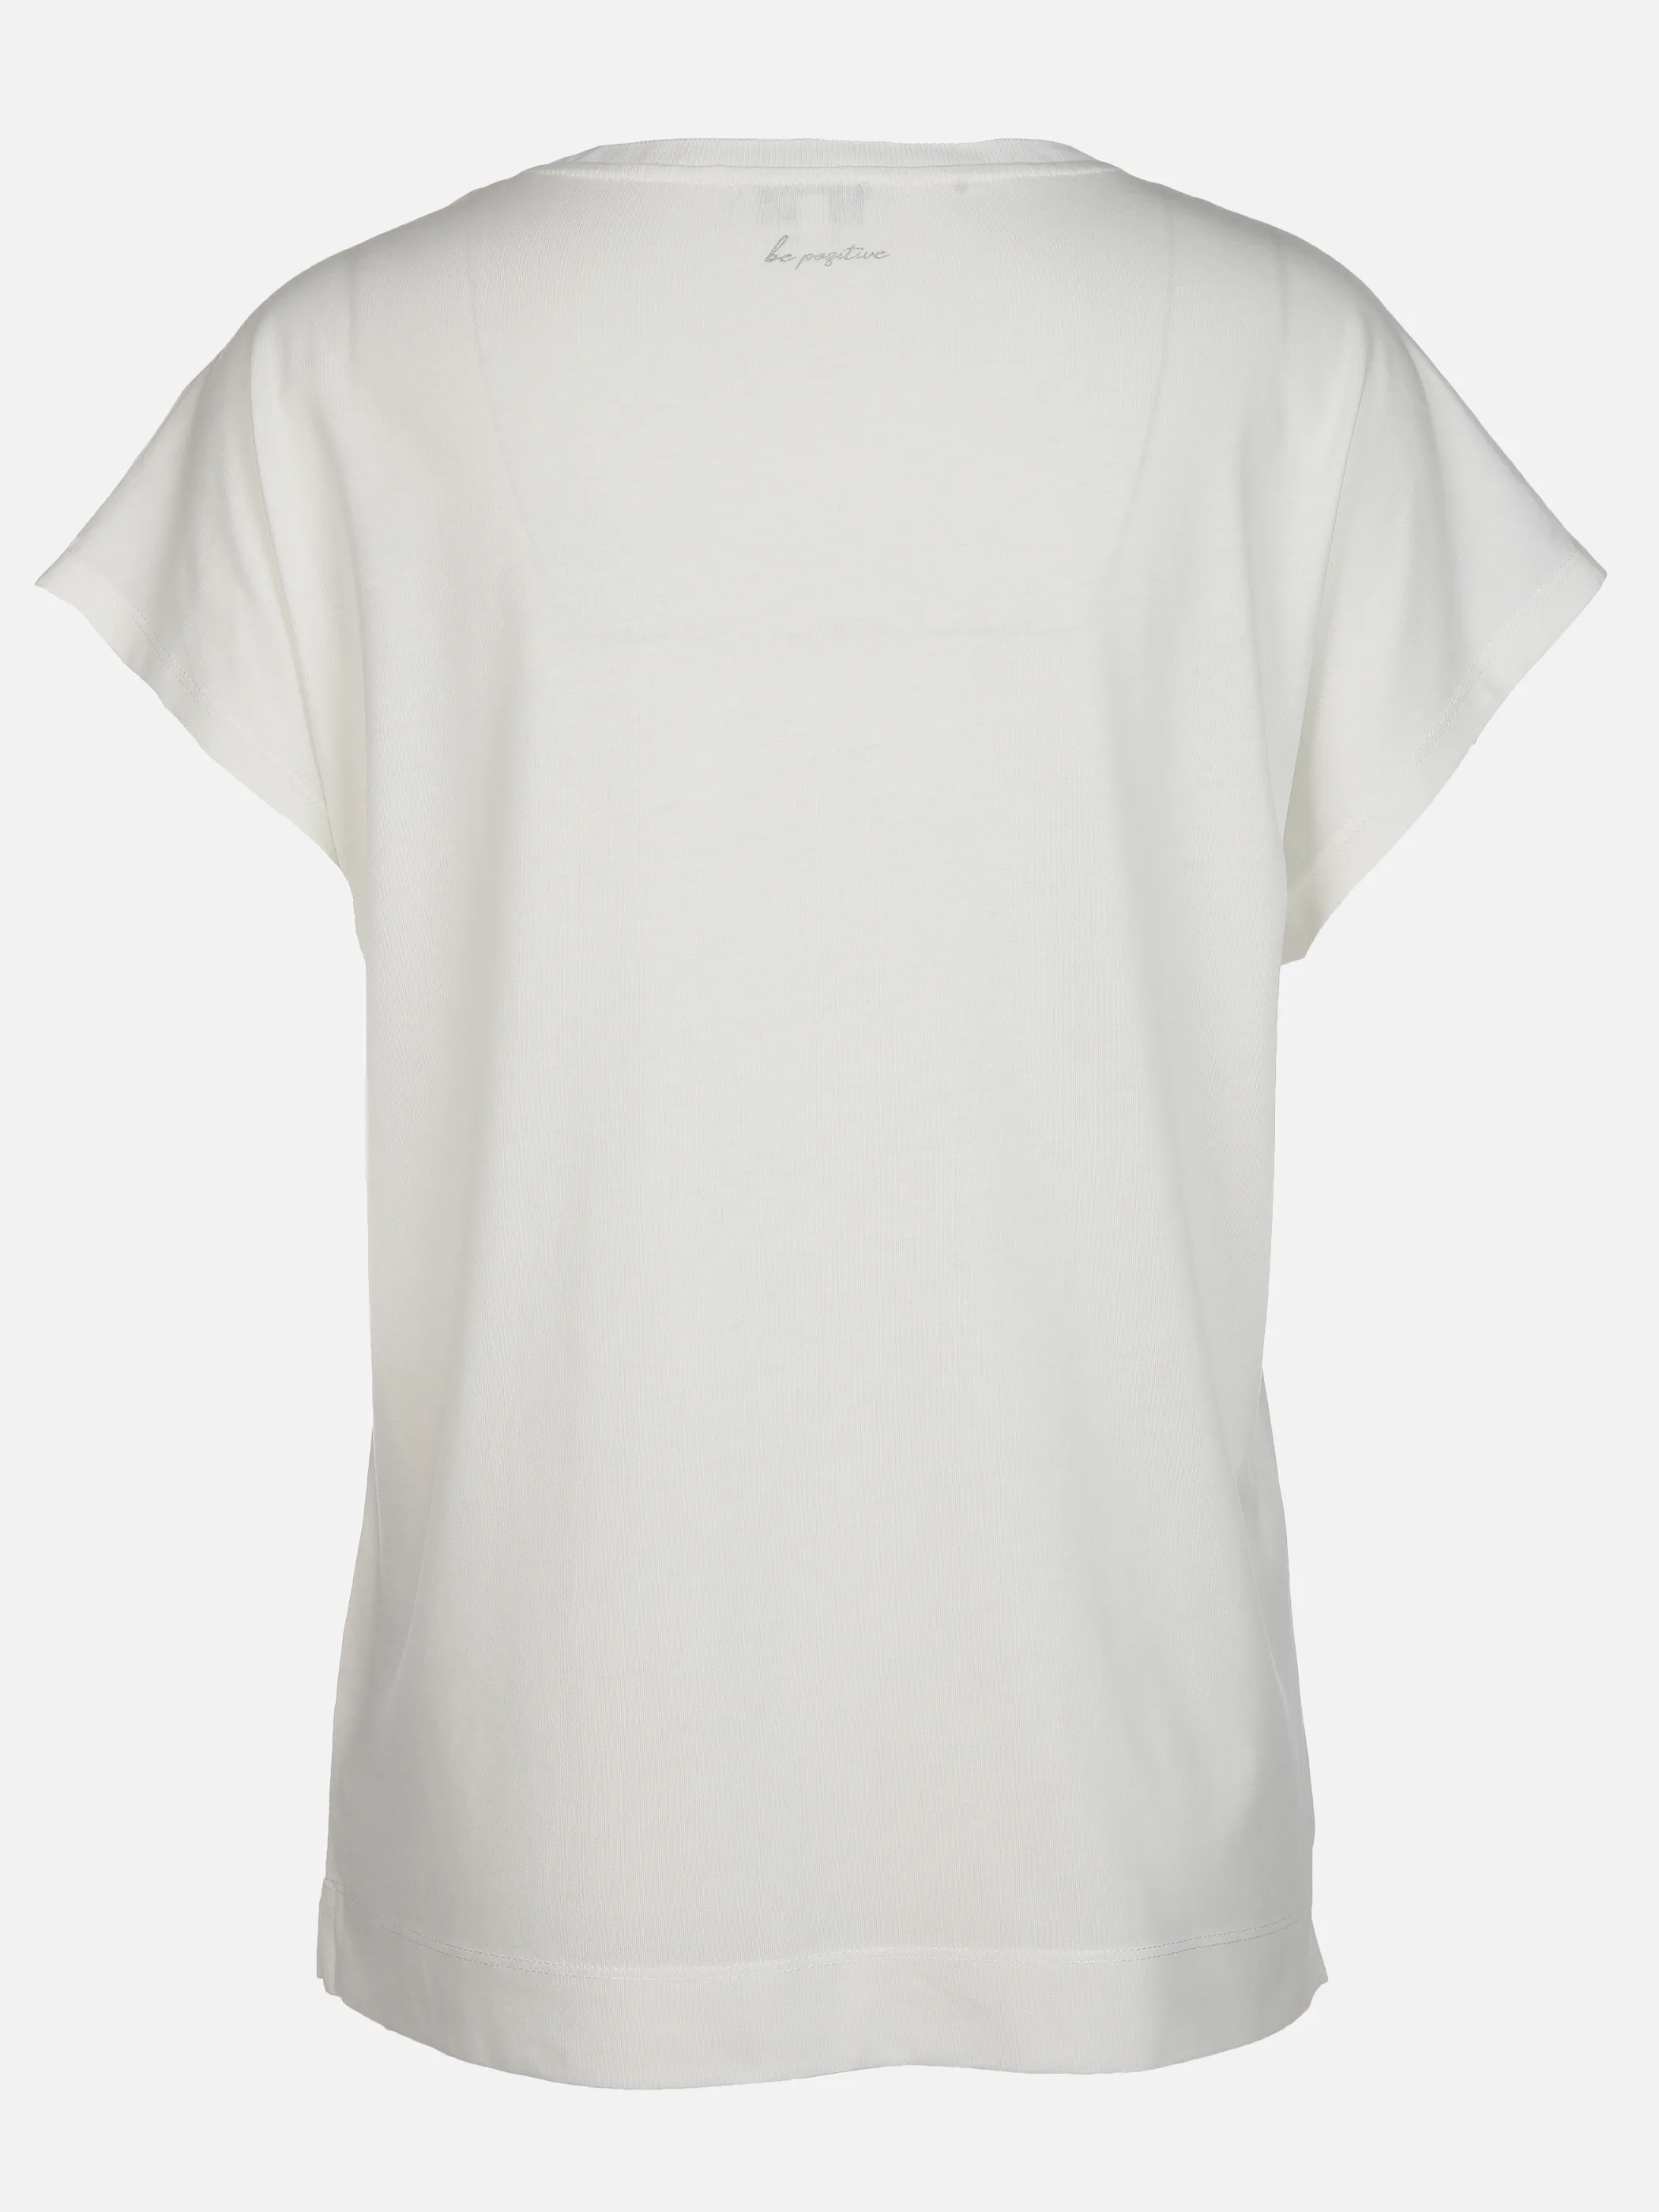 Lisa Tossa Da-T-Shirt m. Straßapplikation Weiß 893032 OFFWHITE 2